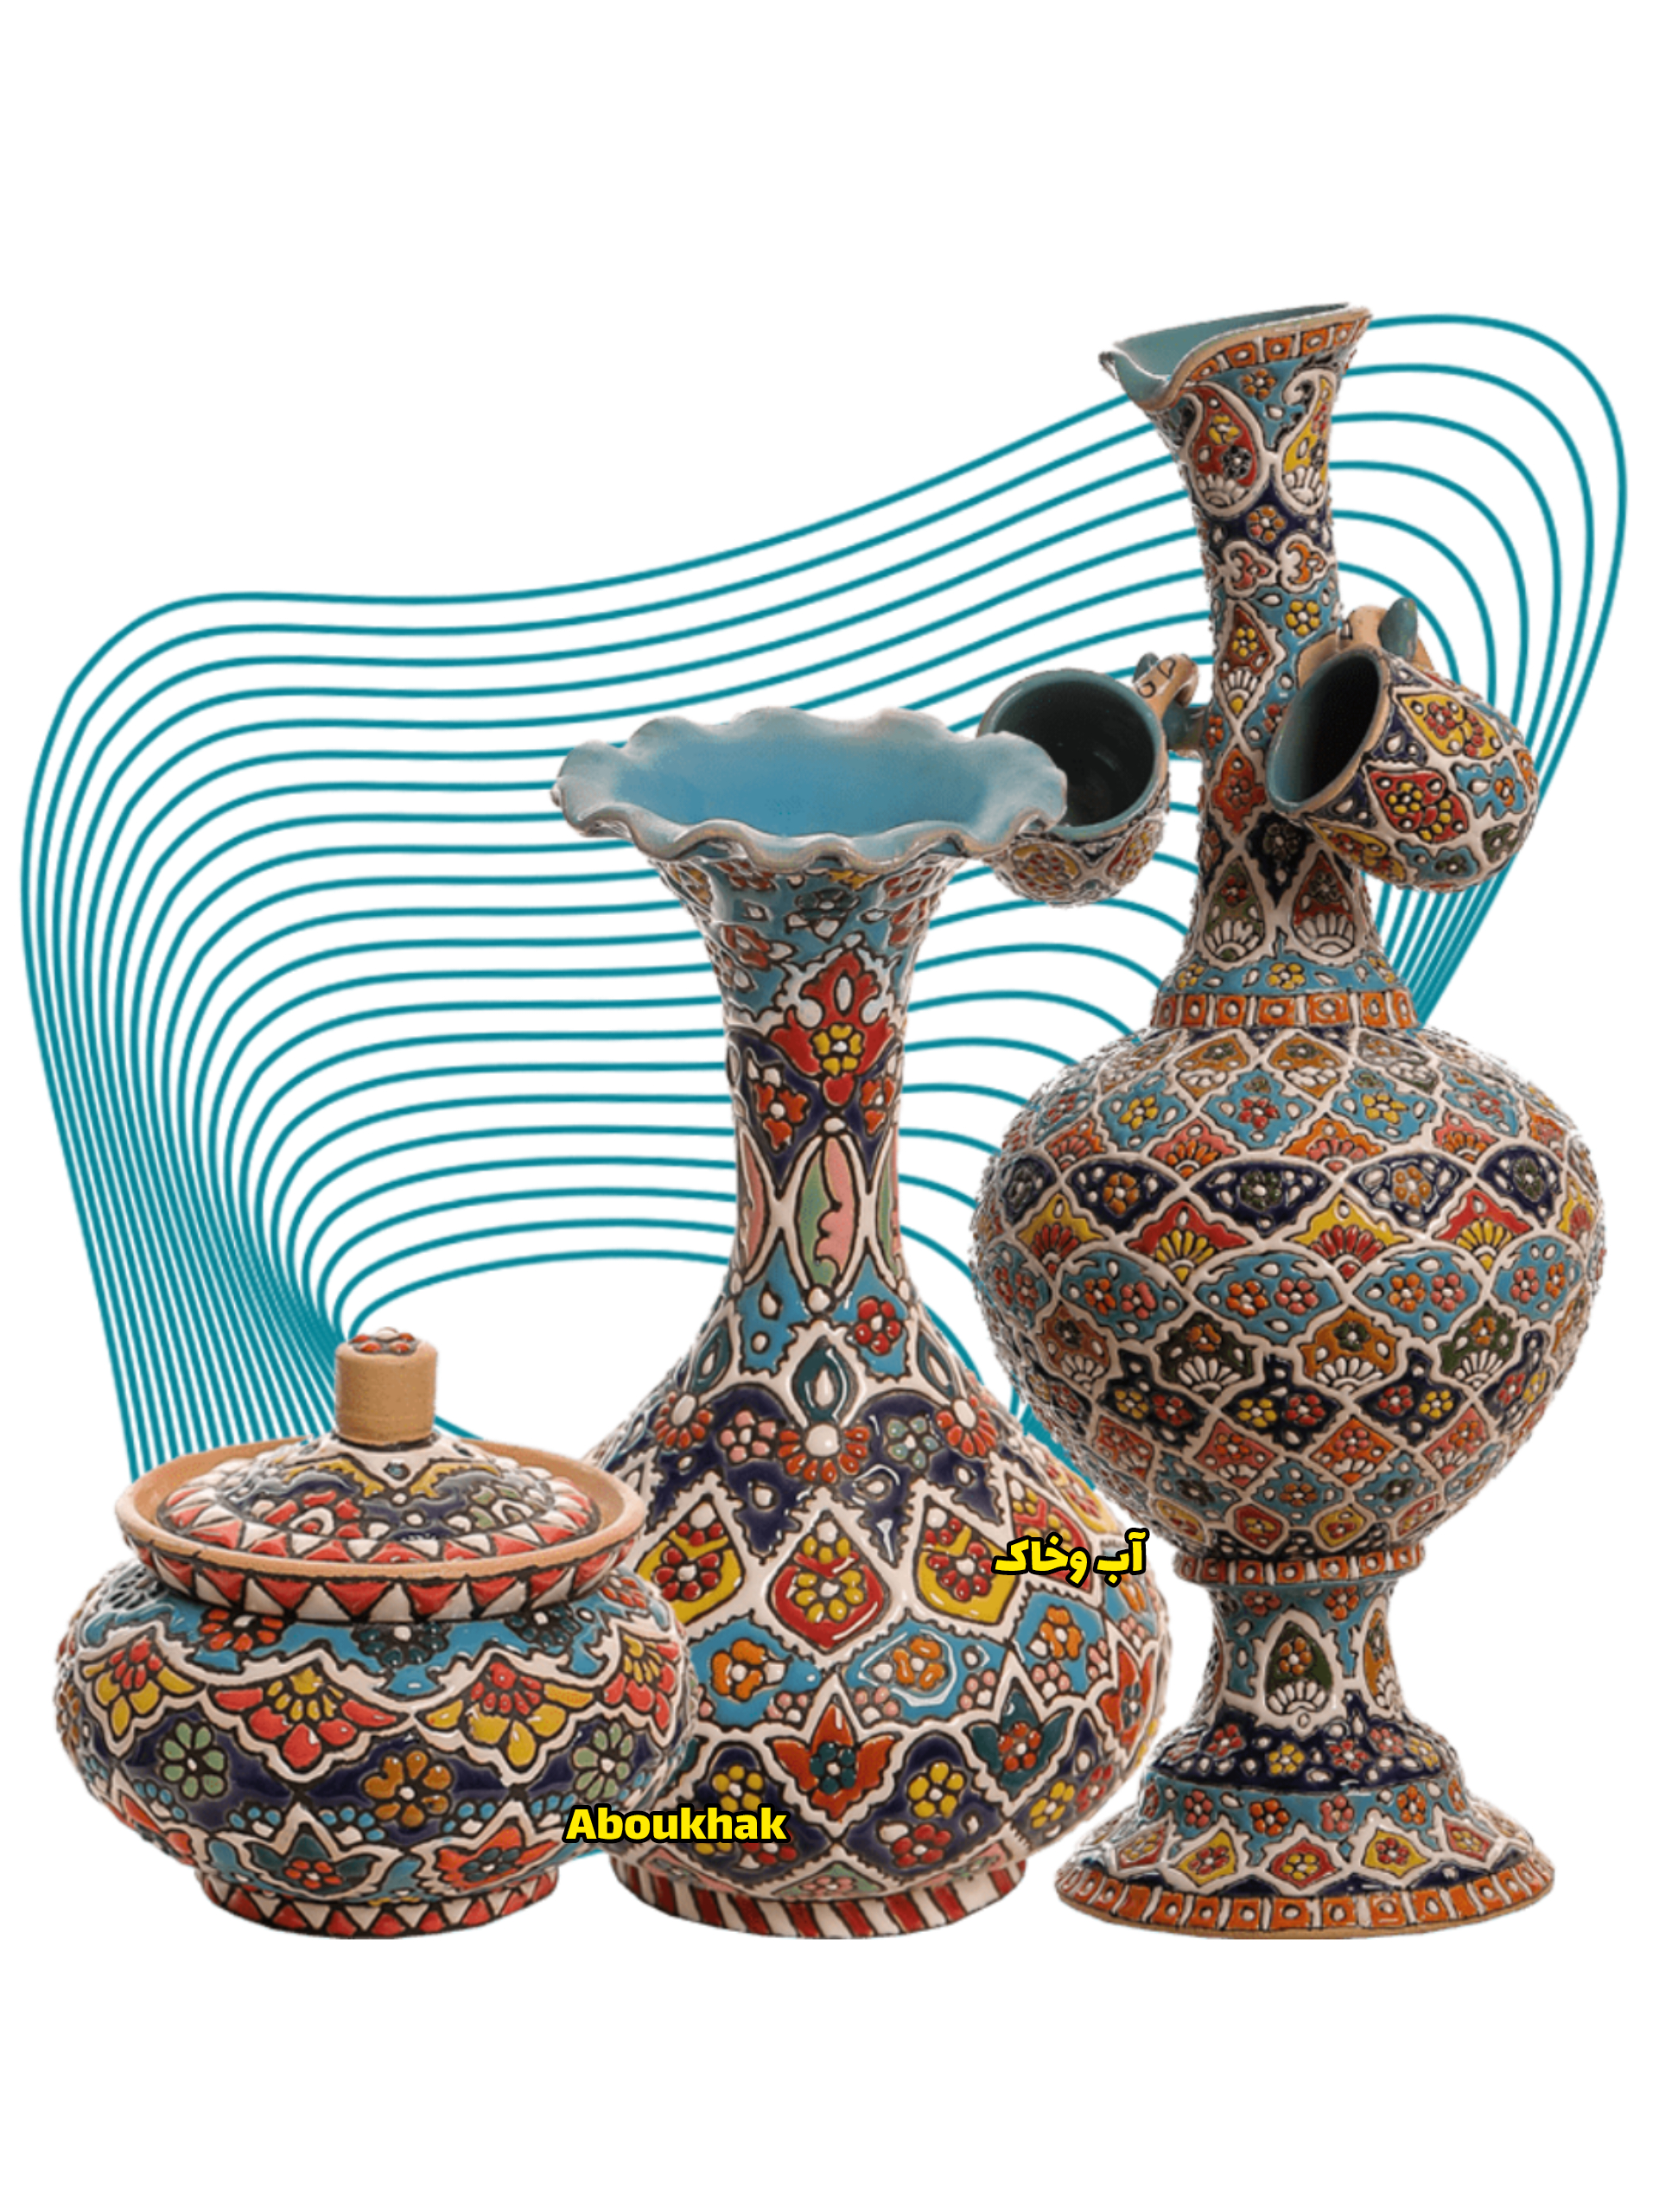 Pottery workshops in western Iran